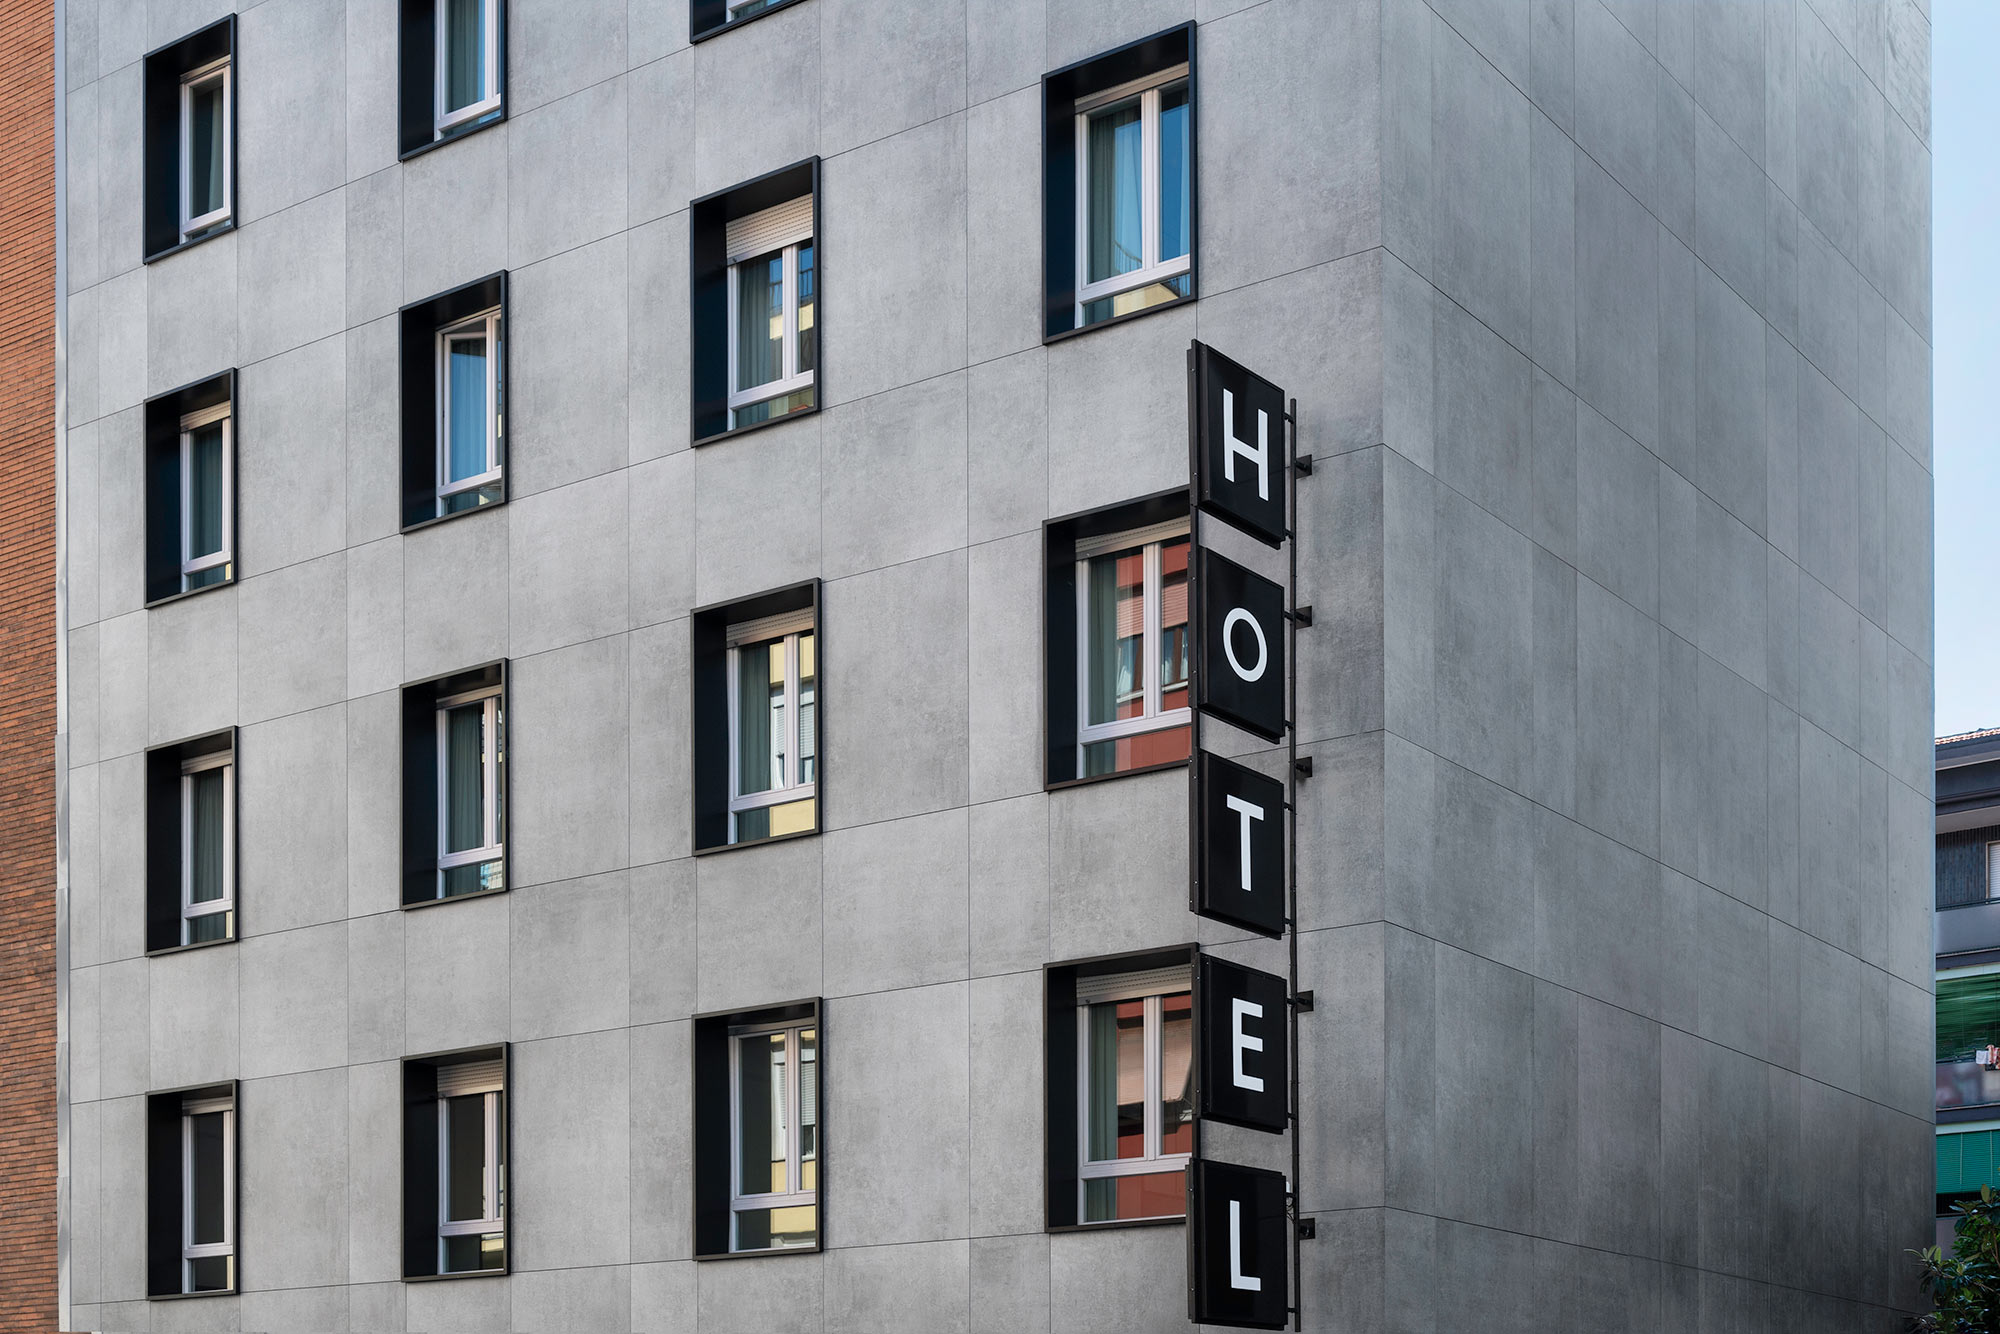 Image of Cosentino Hotel Molise 2 05 H.R in Dekton: Surprisingly versatile exterior application - Cosentino